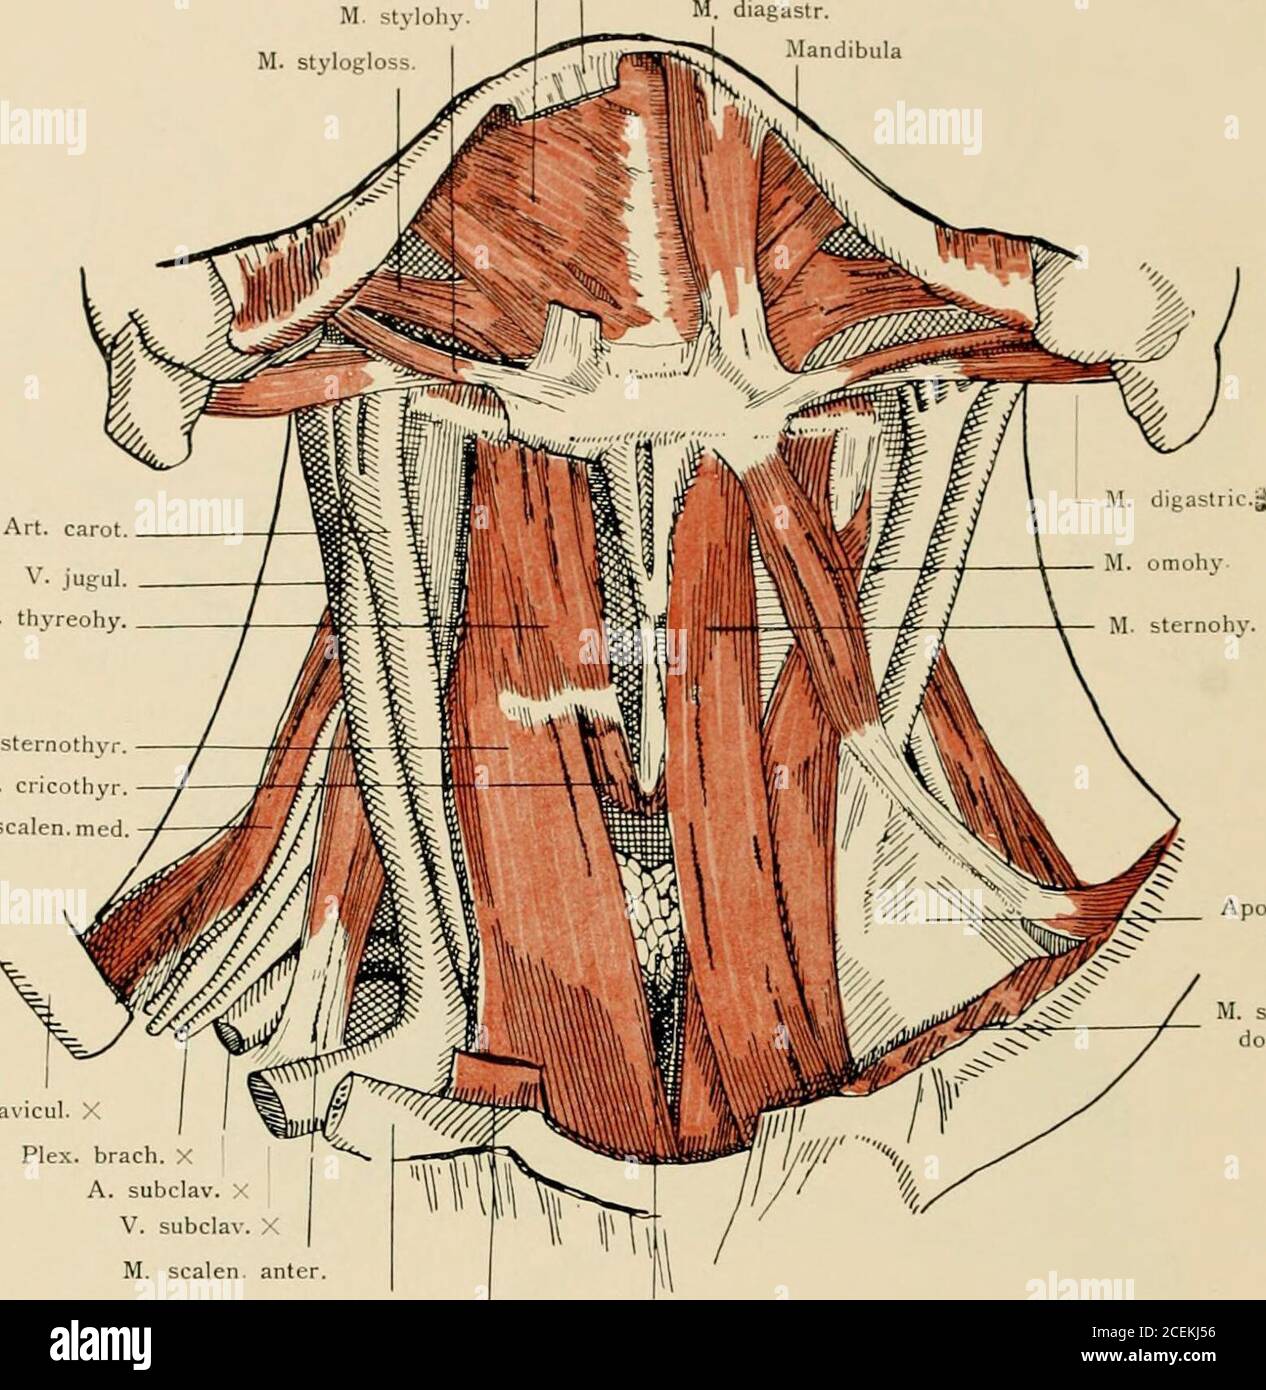 . Die Anatomie des Menschen : mit Hinweisen auf die ärztliche Praxis : Abt. 1-6. Texte et Atlas. Mm. Splénii M. myloh.M. digastr. M. thyreohy,M. sternohv. Fossa supraclav. maj Clavicula M. omo- Cap. Plus tard. Hyoïde médiale cap. M. sternocleidom. Trigonum omociavic. Muskeln des Halses im profil. DAS Platysma ist entfernt. Musculi colli. — 27 .3.5. Art. Carot V. jufiul,M. thyreohy. M. sternothyr. M. cricothyr, M. Scalen, med M. stylohyM. Stylogloss 33 M. mylohy. ^i- ciigastr. X M. diagastr. Jlandibula. Aponeurosiscolli M. sternocleidomast. X Clavicul. brach. X Plex. X A. subclav. Sous-clav. M. S. Banque D'Images